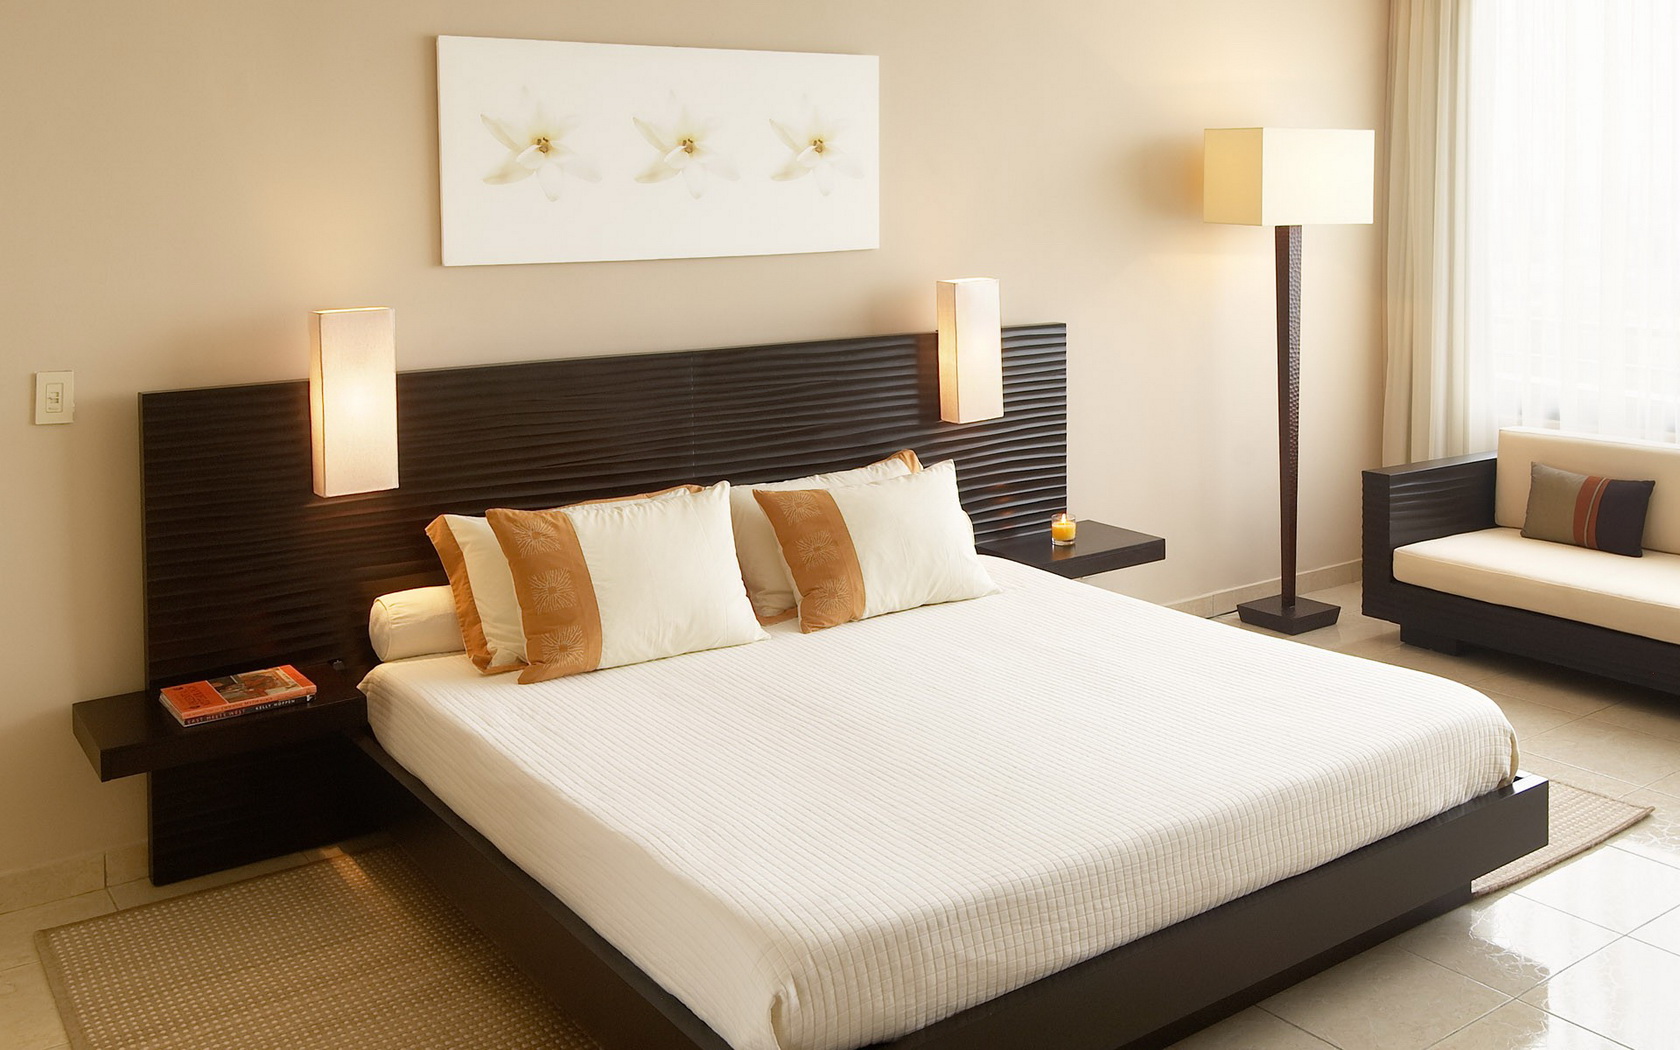 148305 bedroom bed architecture interior design